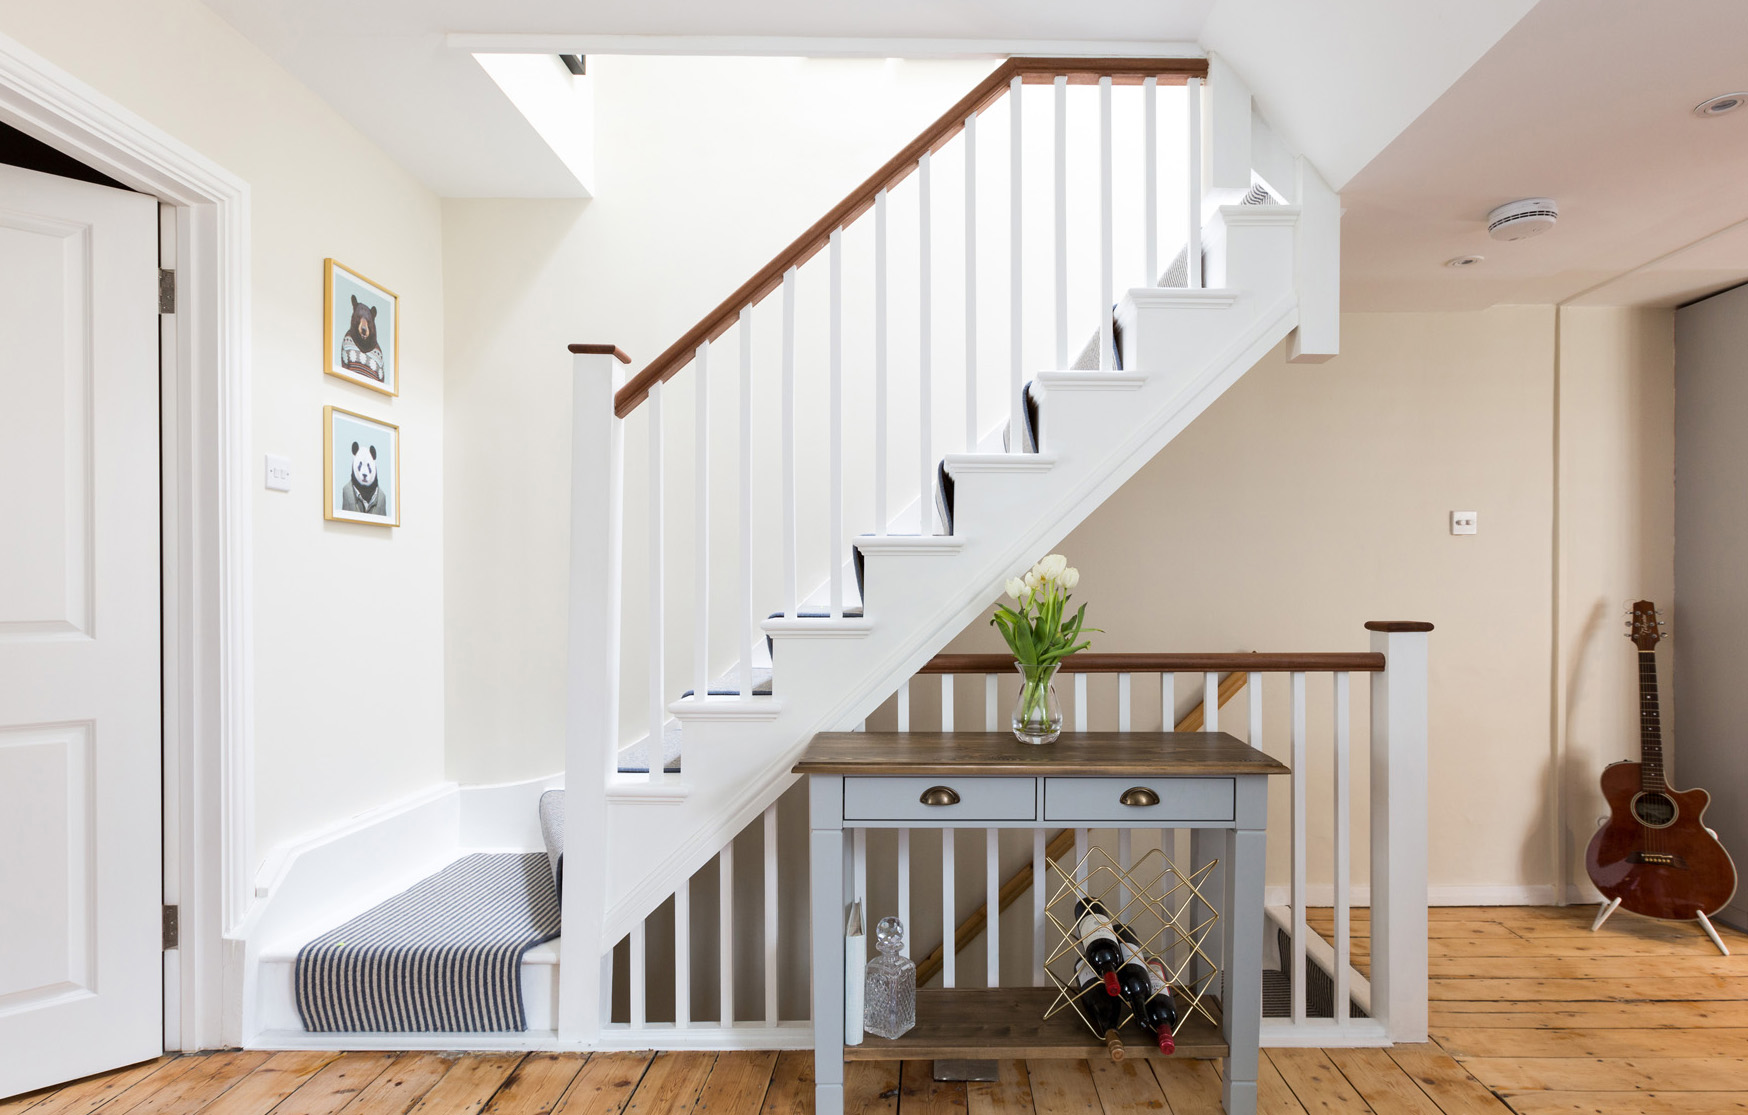 Loft Conversion Stairs: Design Advice, Building Regs & More | Homebuilding